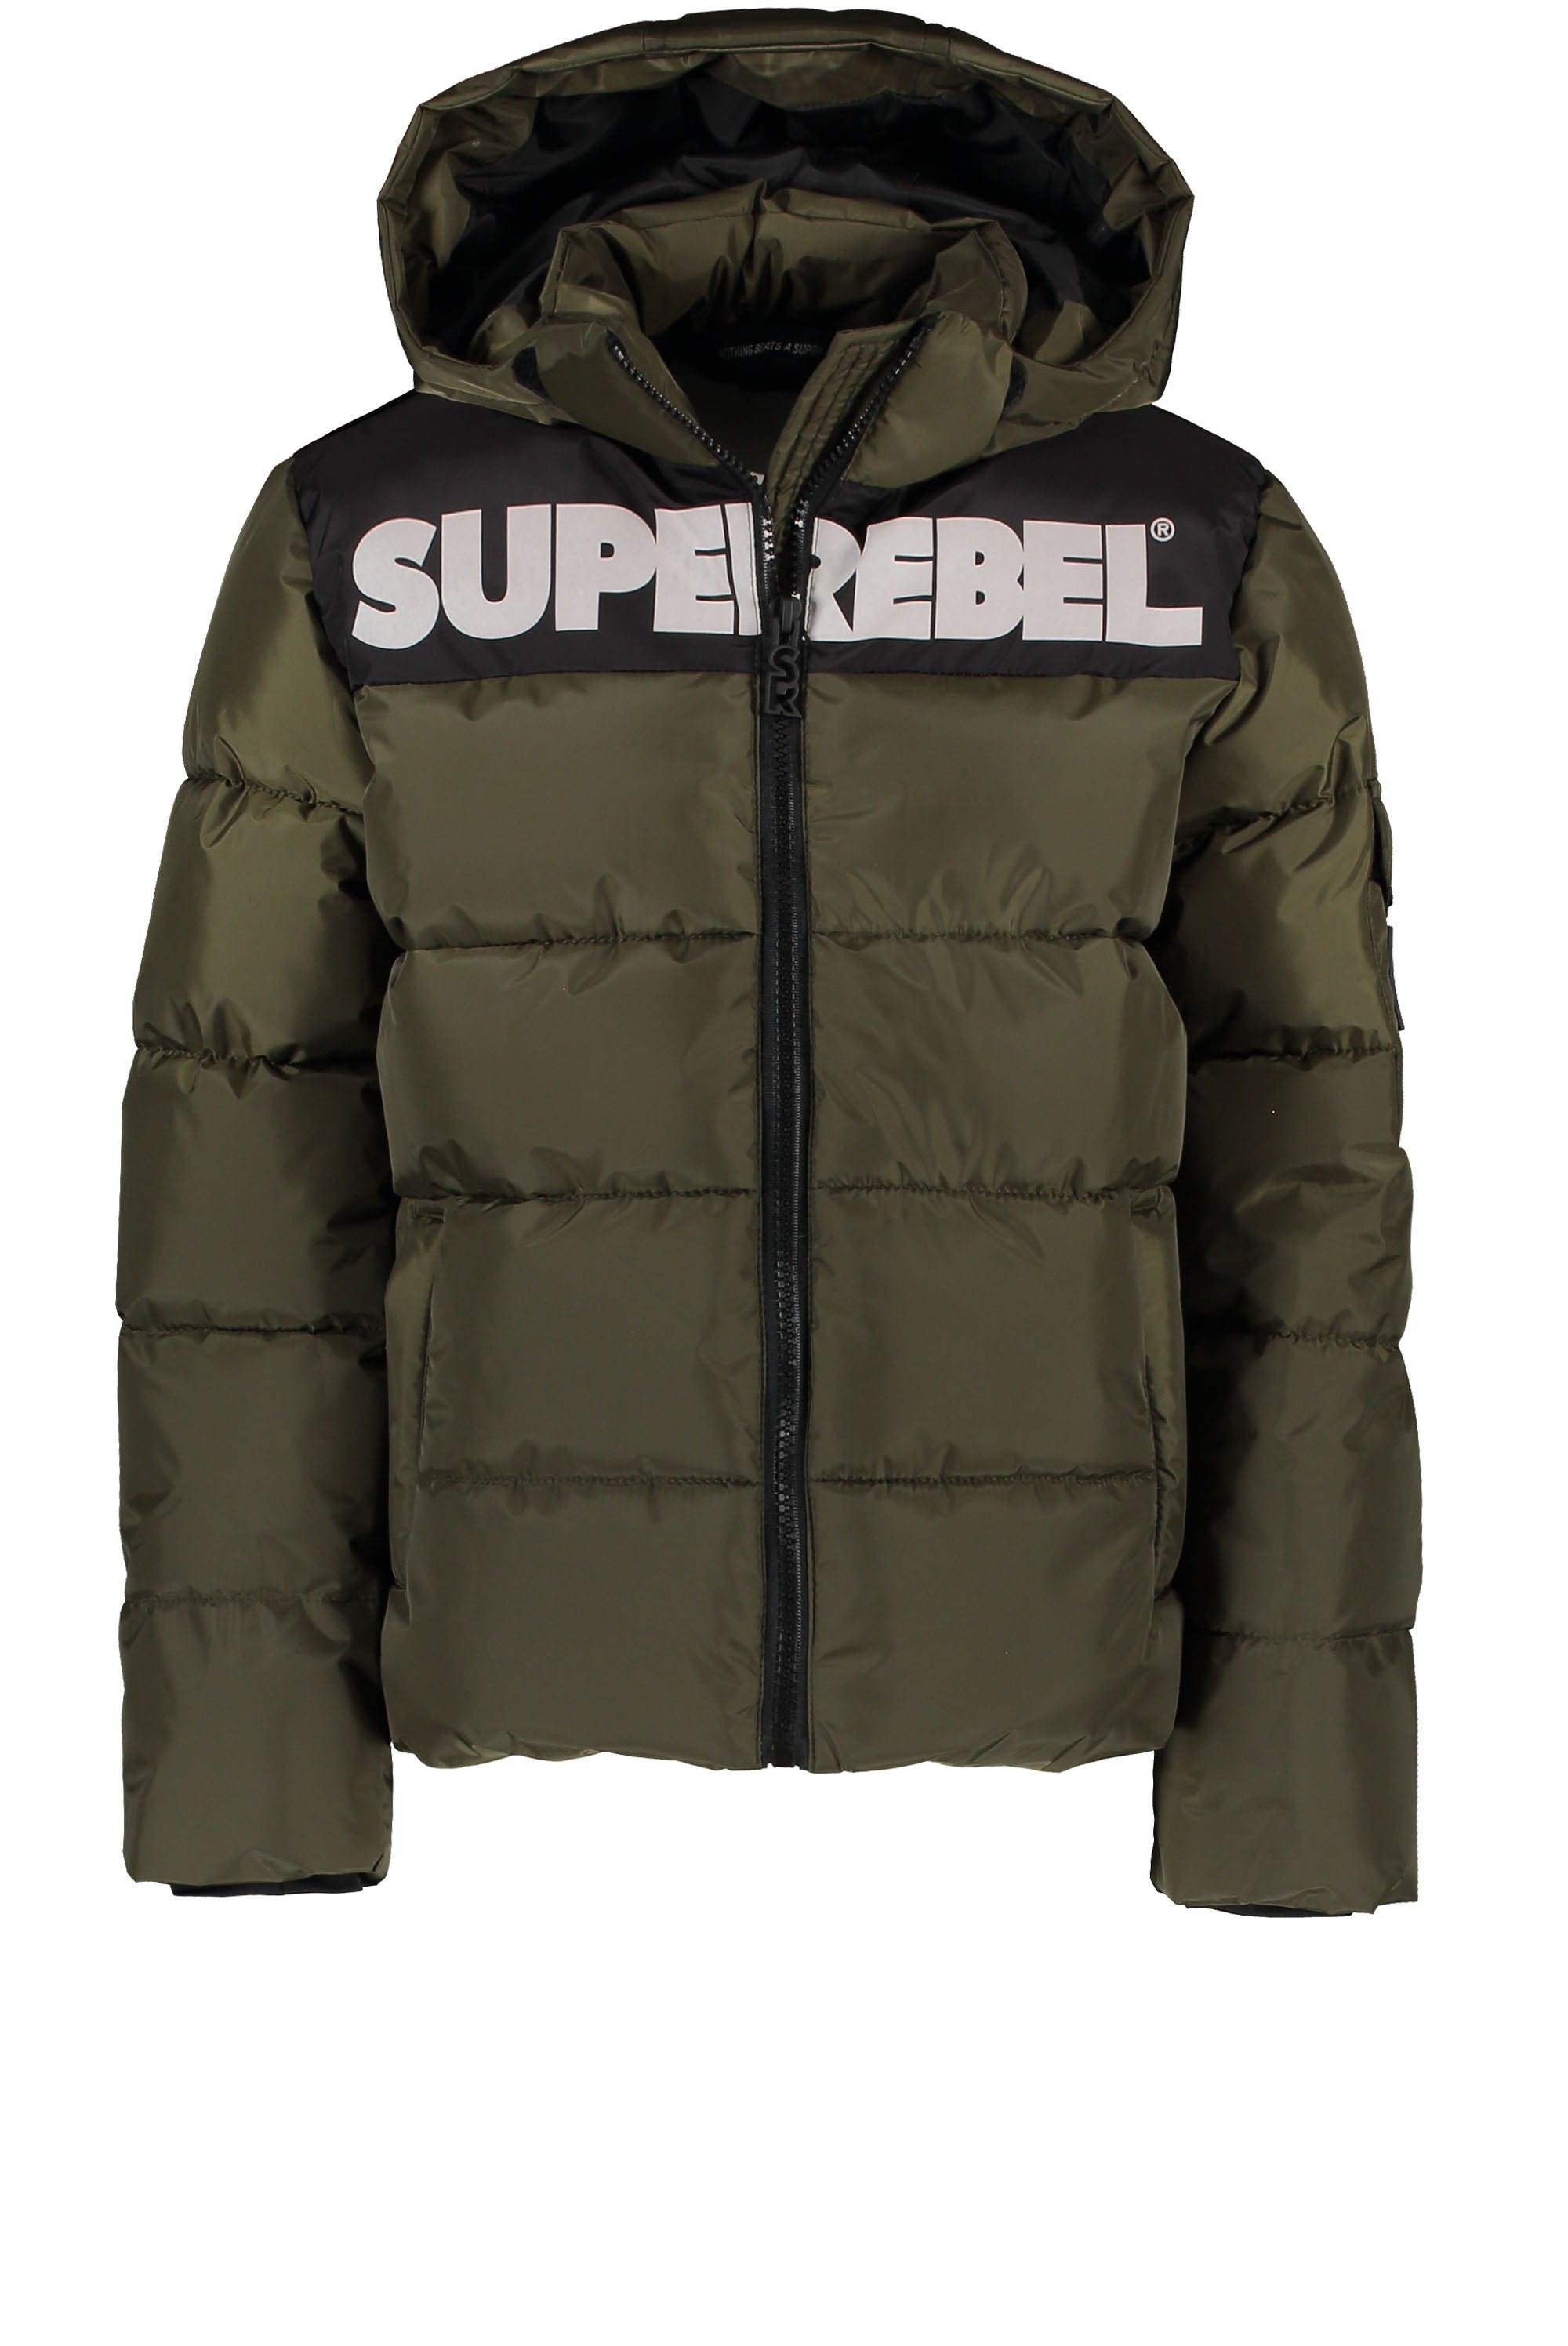 Super Rebel Winterjacket STUNG Army